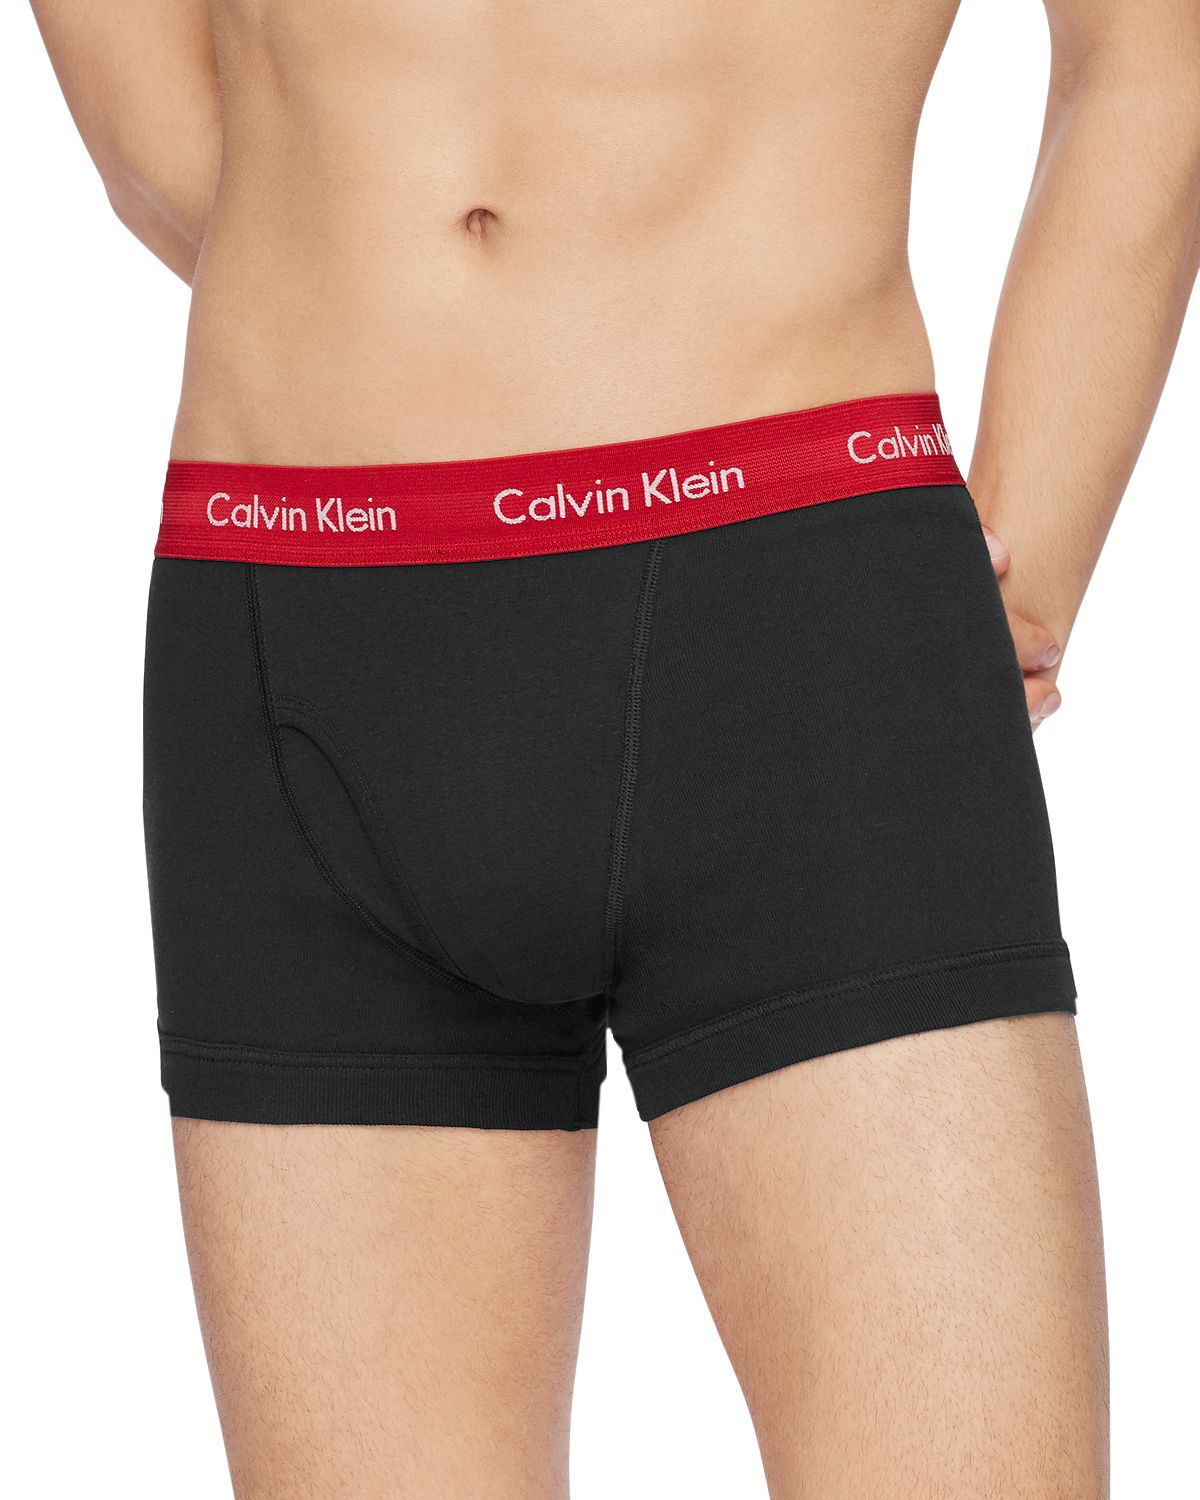 Calvin Klein Cotton Classic Boxer Briefs Pack Of 5 Black Multi